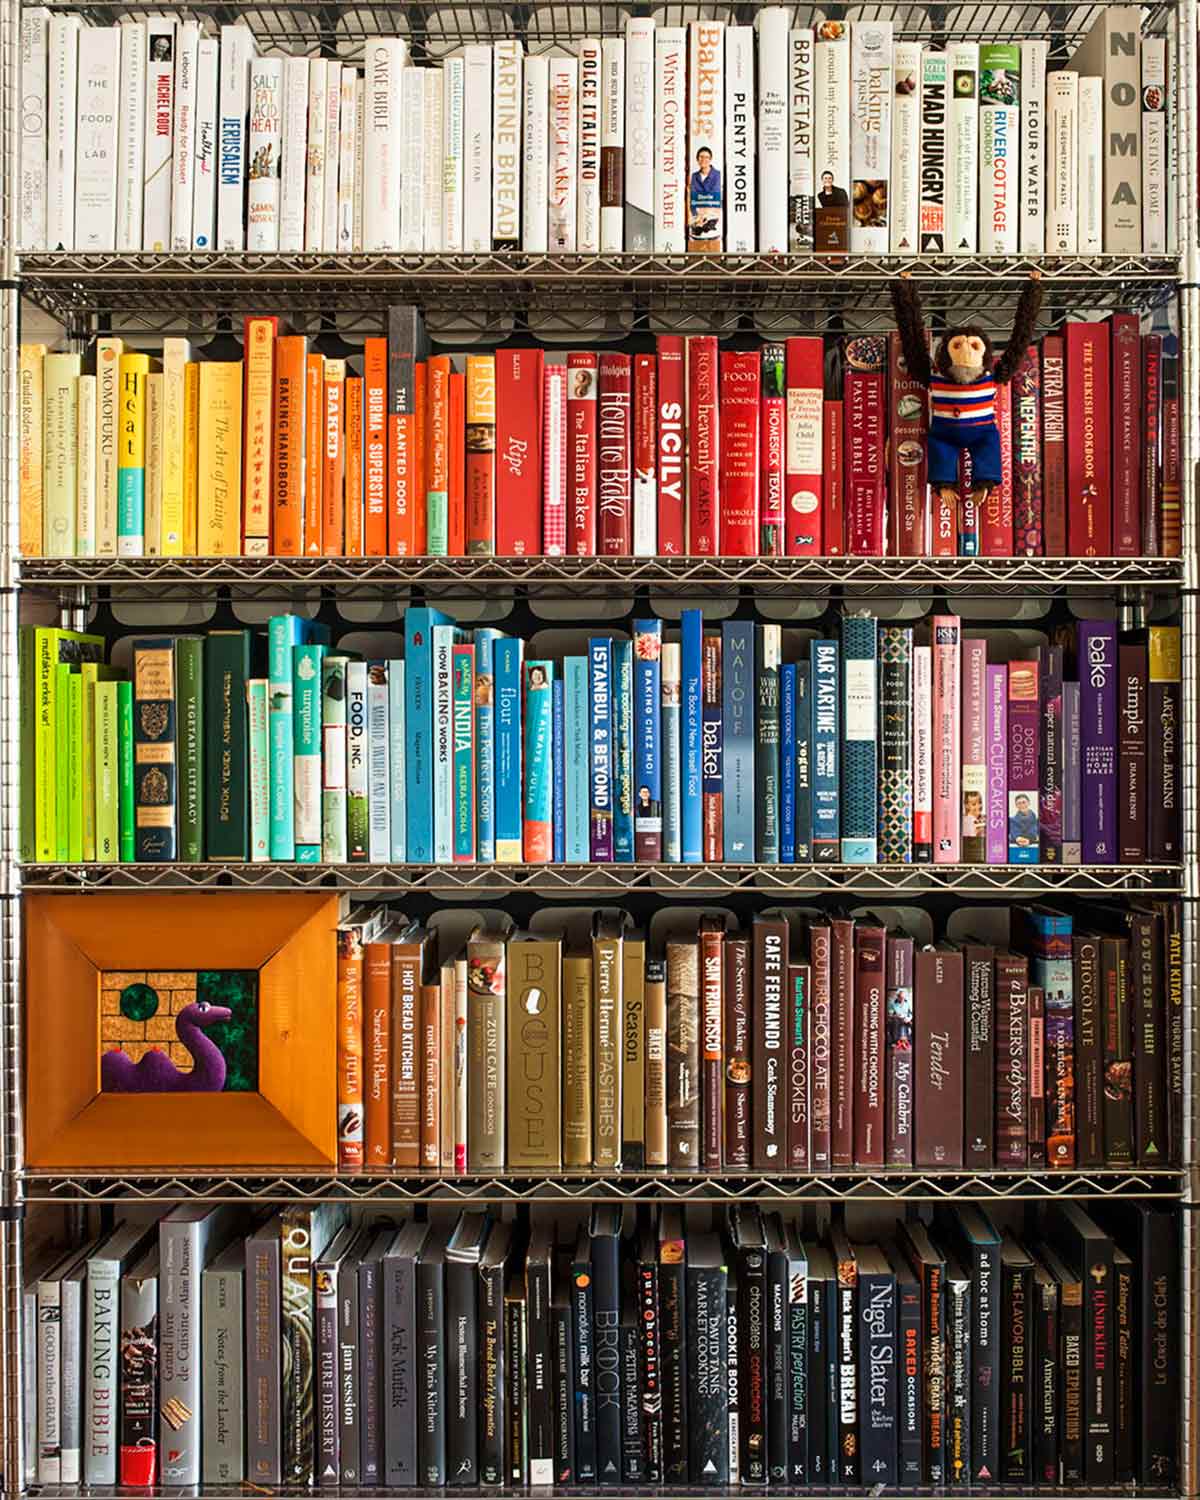 Five shelves of color coordinated cookbooks.